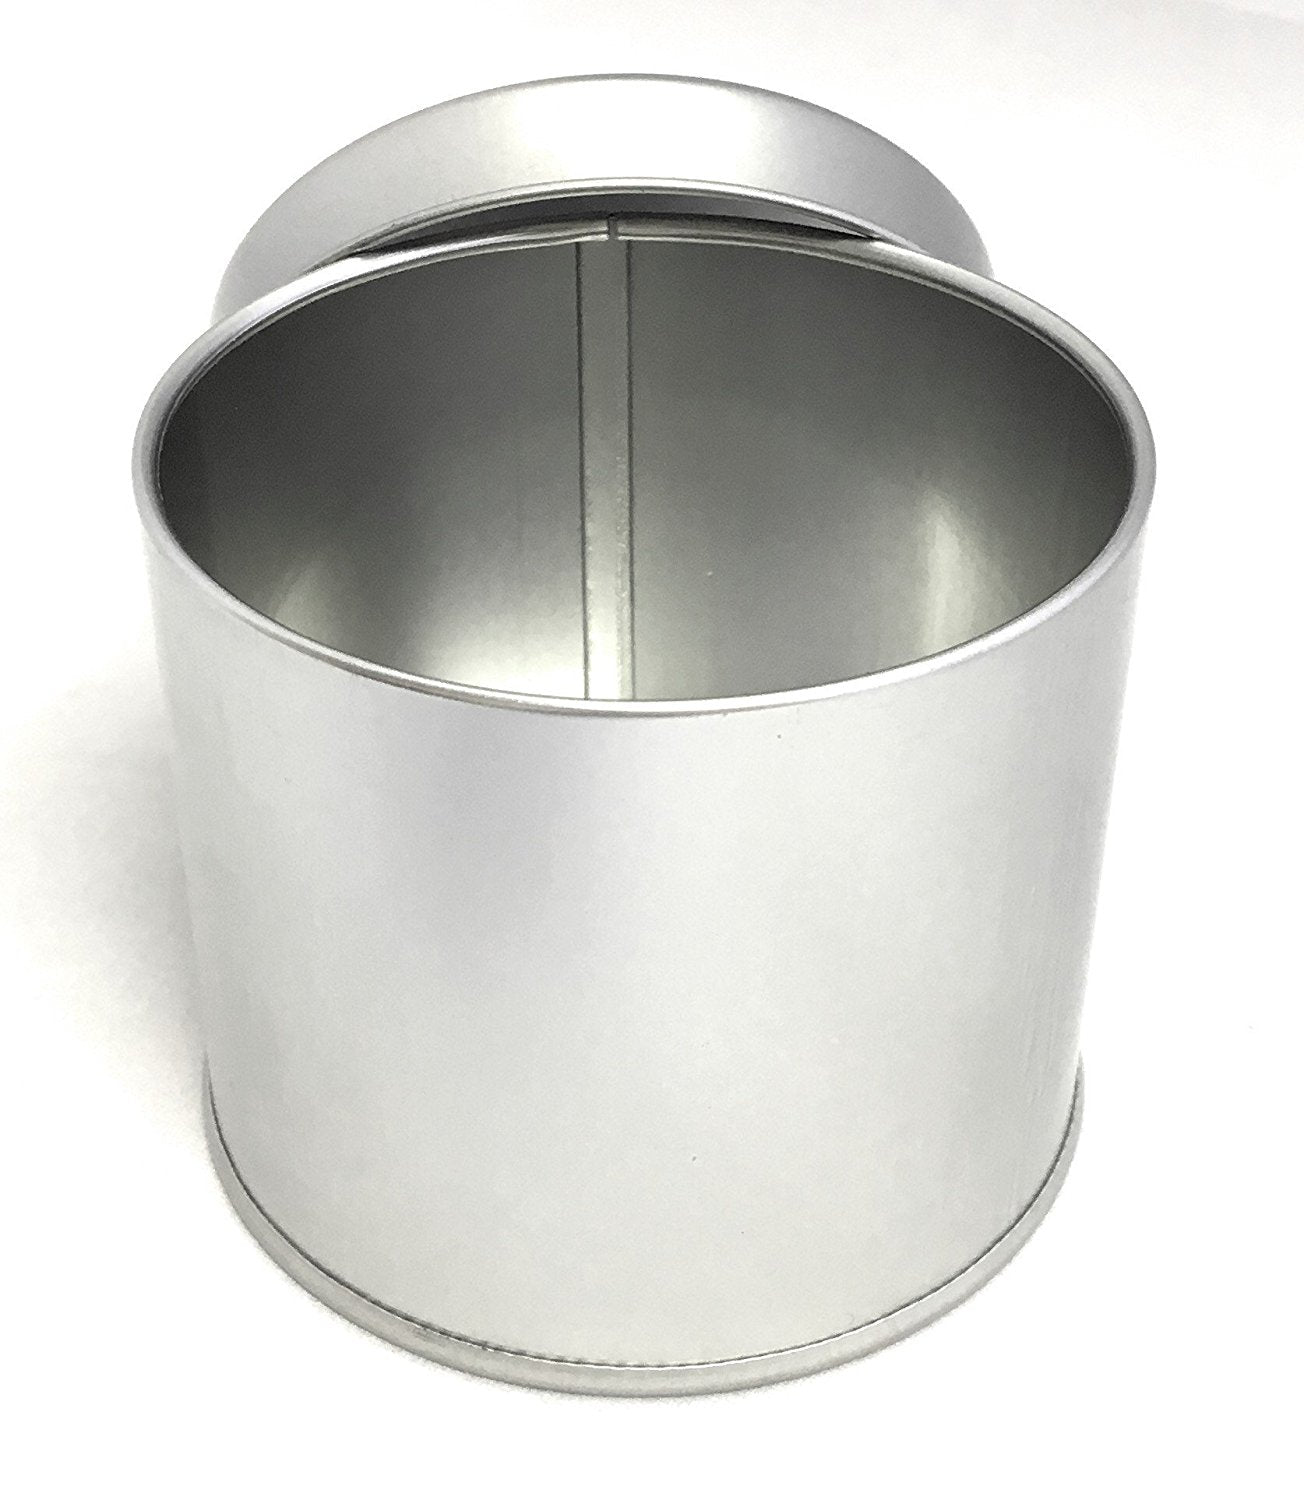 Tin Cans, 12 Pack – Medium (6 oz) – 3” x 1.9” - RingBinderDepot.com